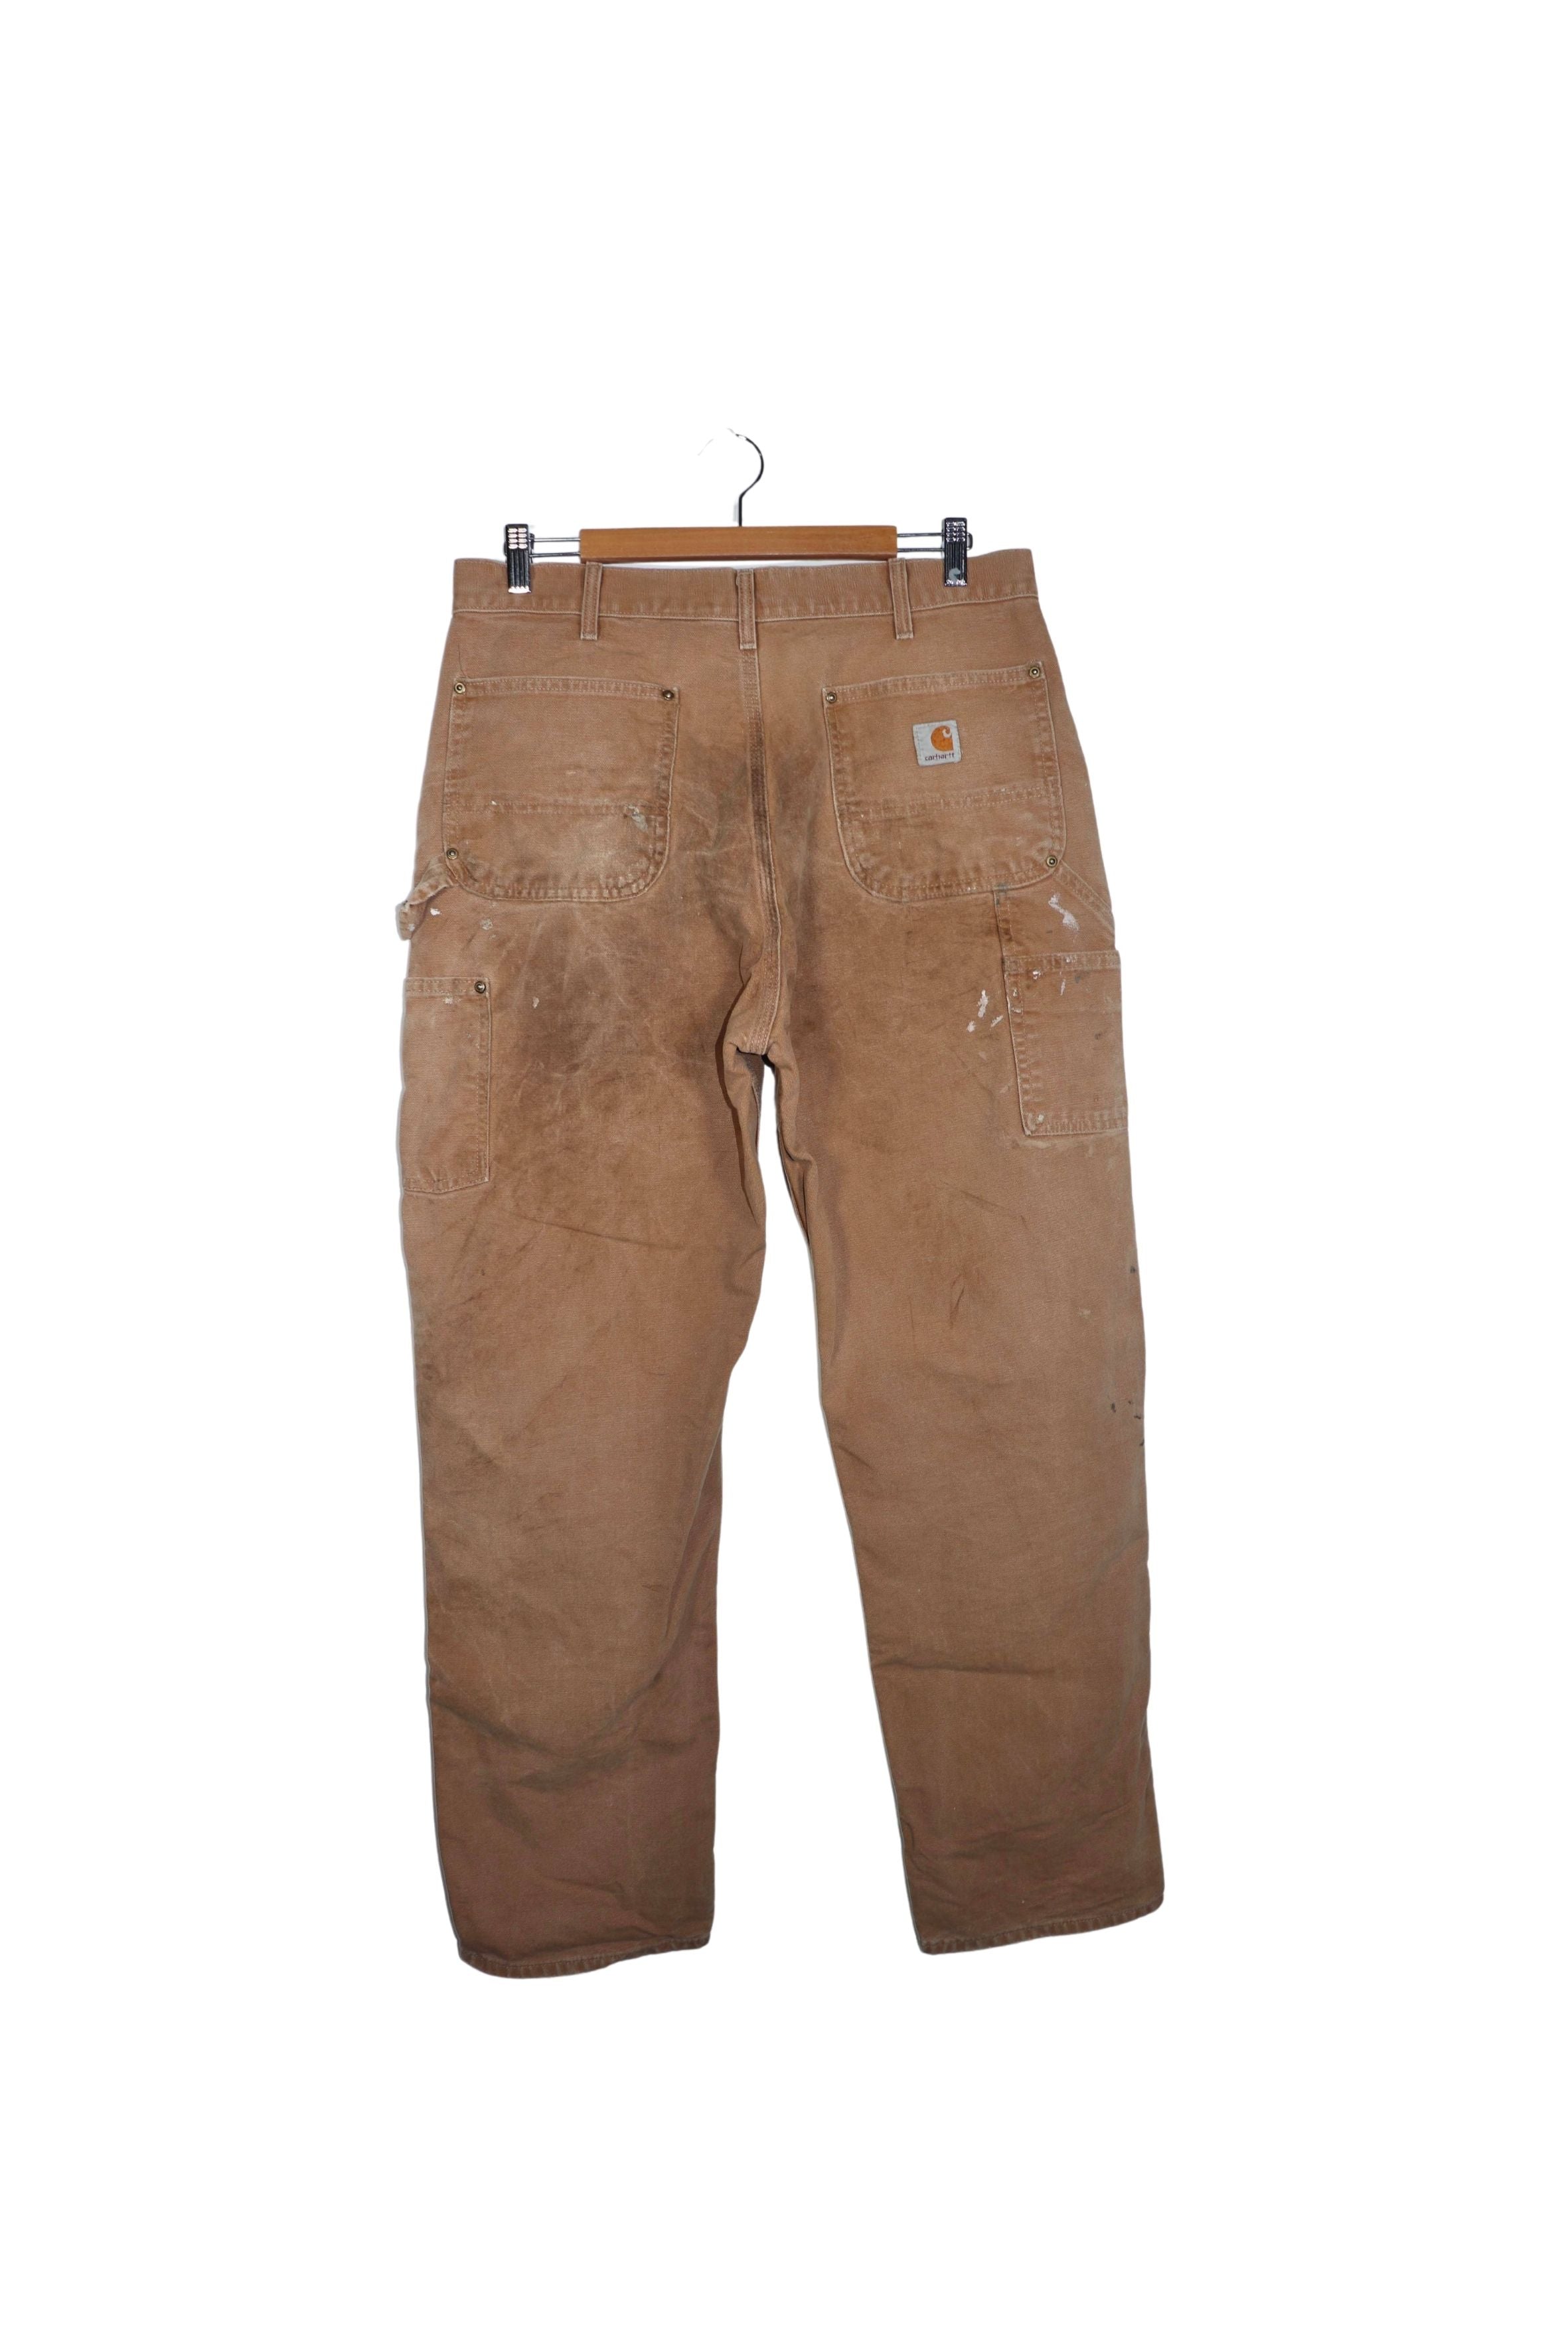 Vintage Carhartt Double Knee Thick Light Brown Carpenter Pants  Size: 34 X 34